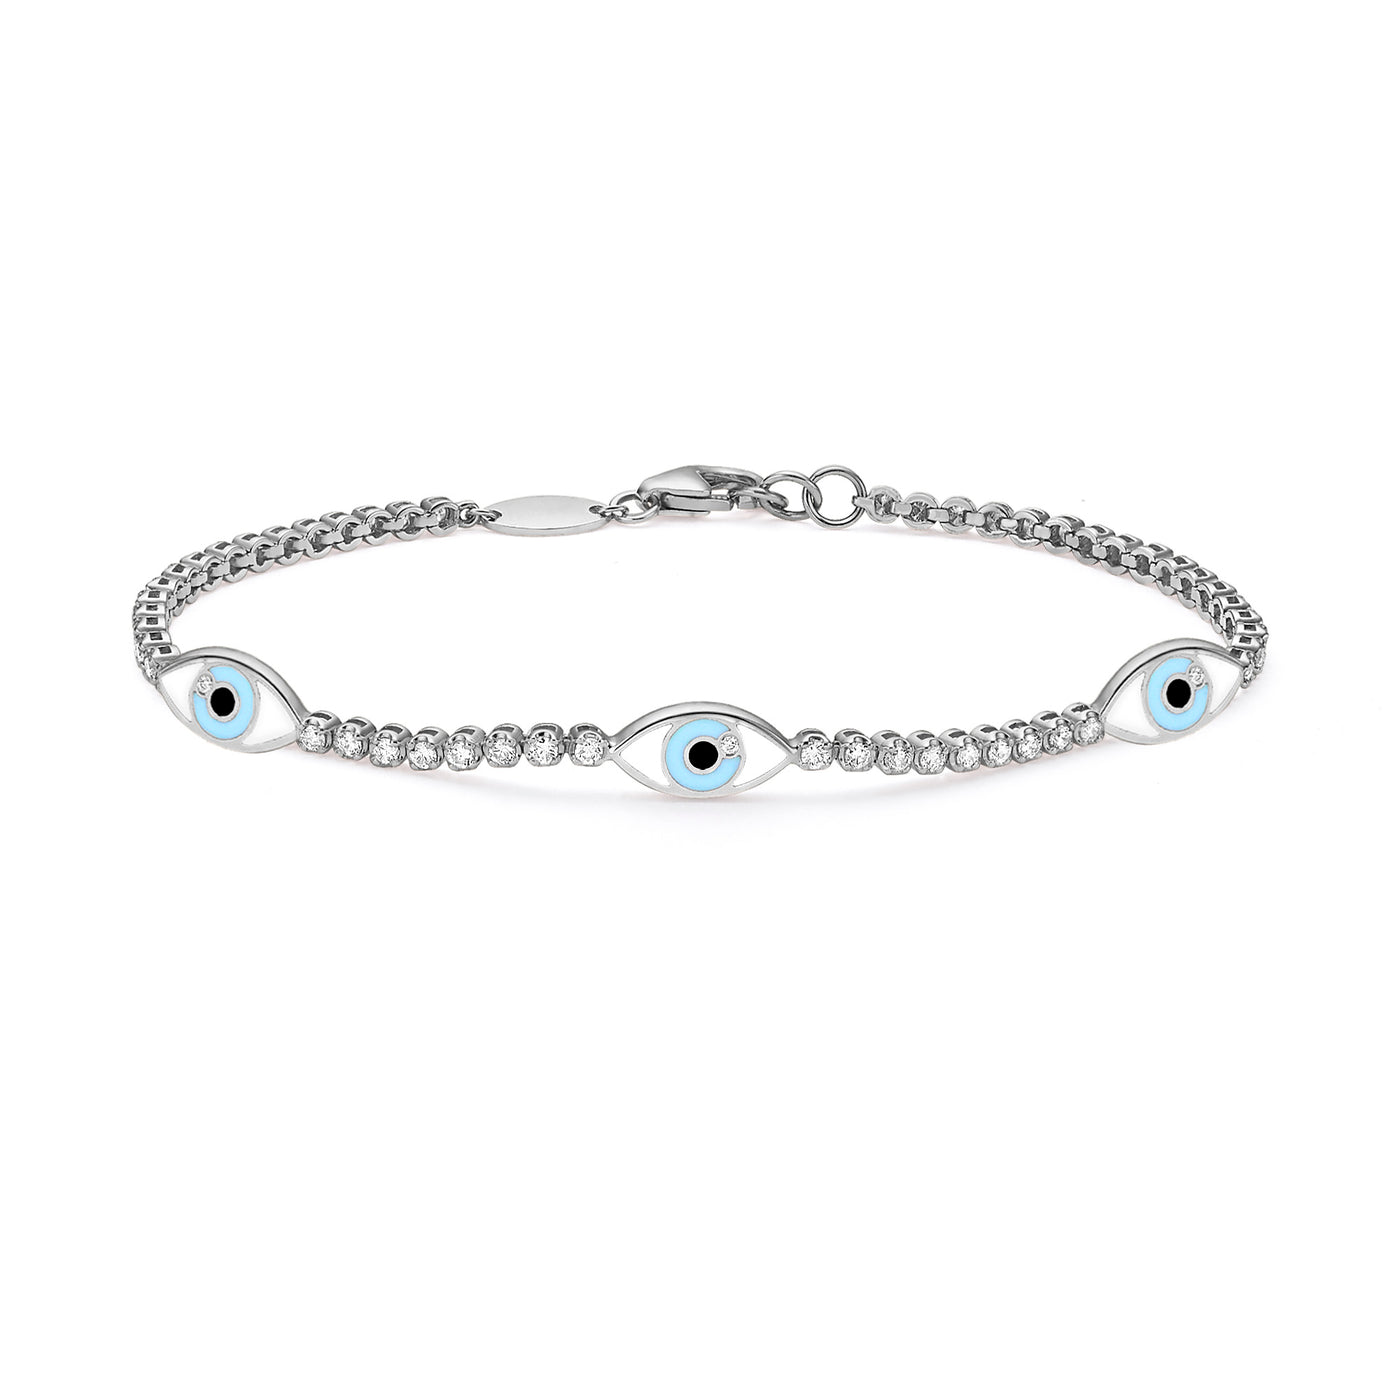 3 Eyes tennis bracelet